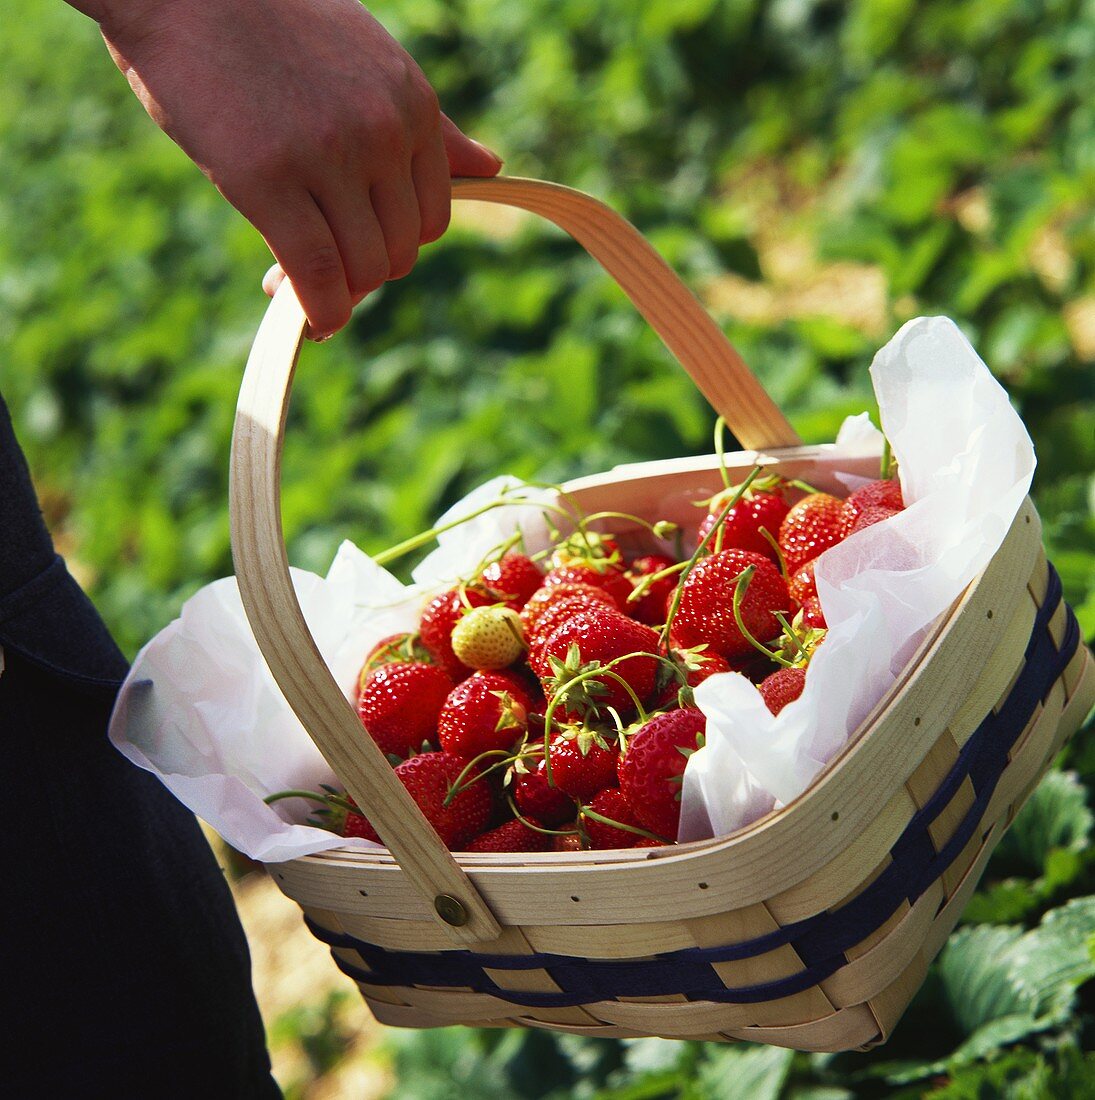 Hand holding basket of fresh strawberries